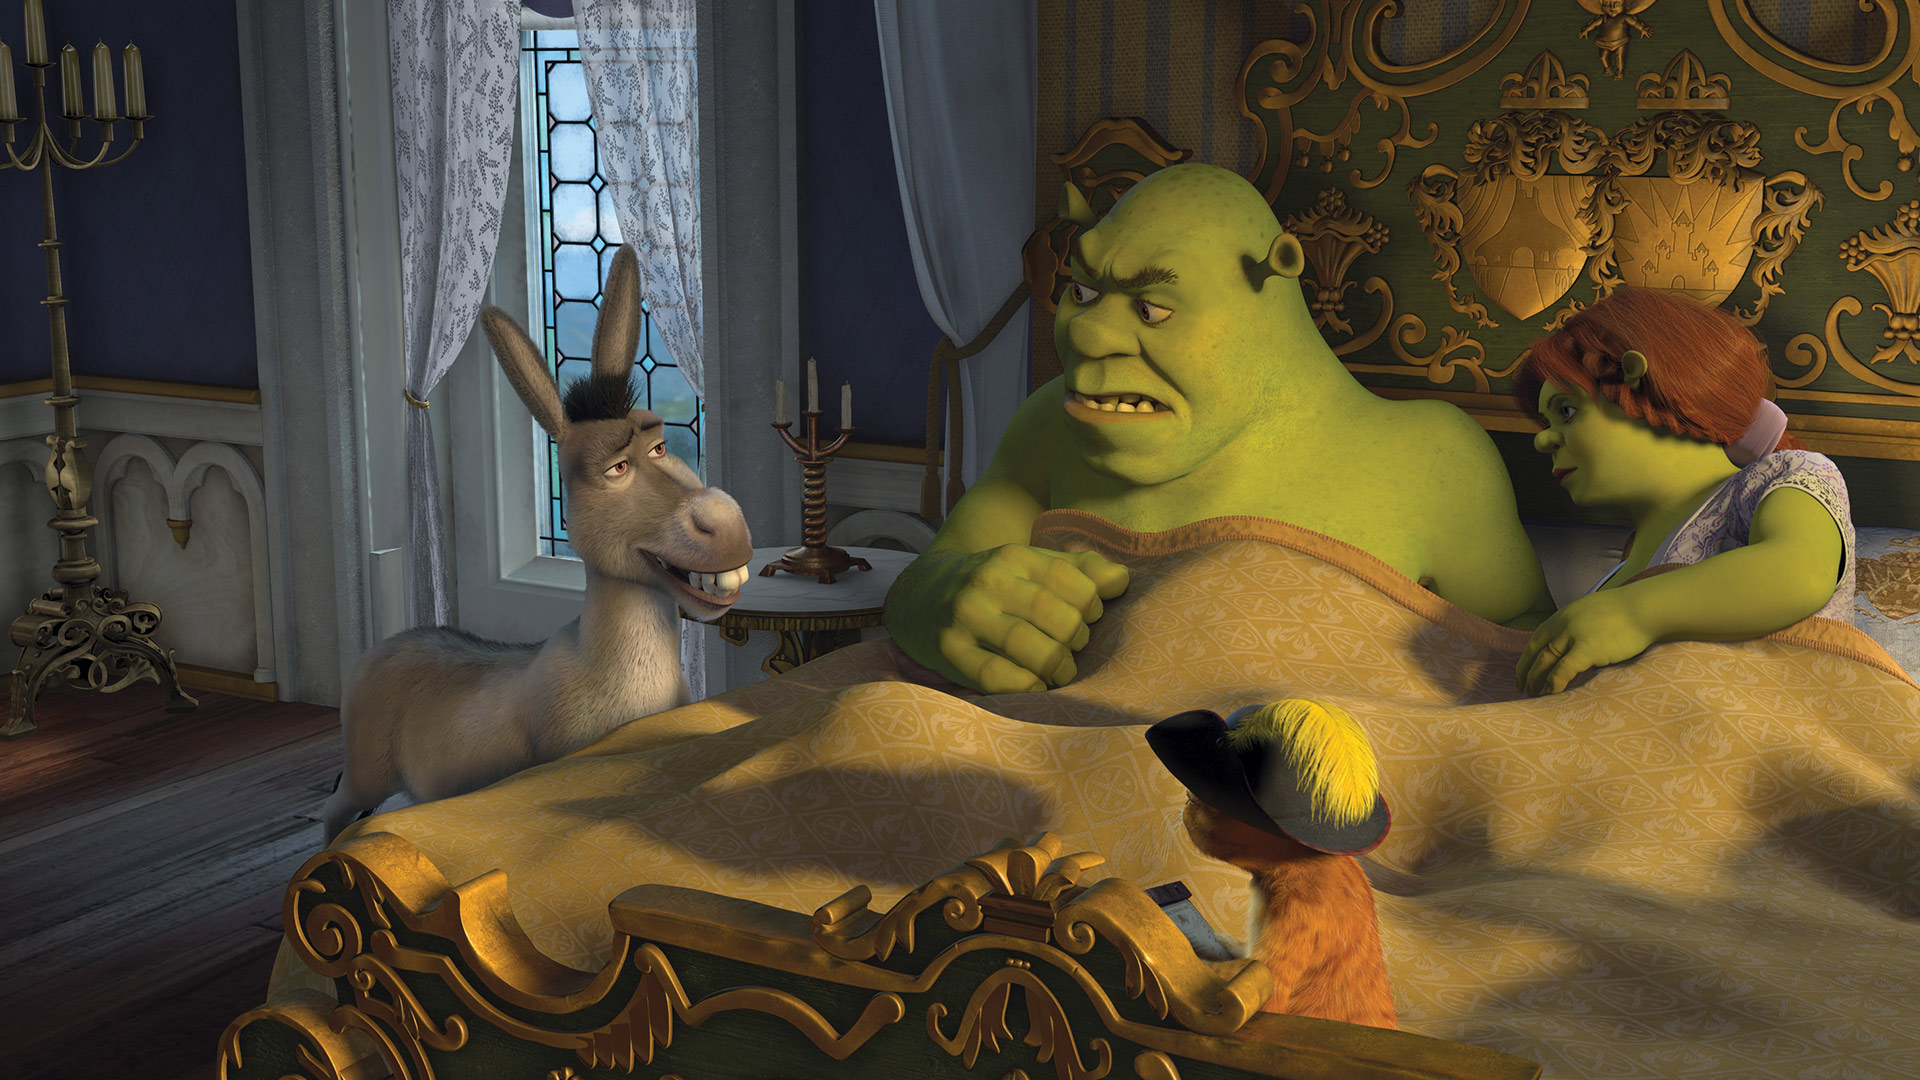 HD wallpaper: Shrek, Shrek the Third